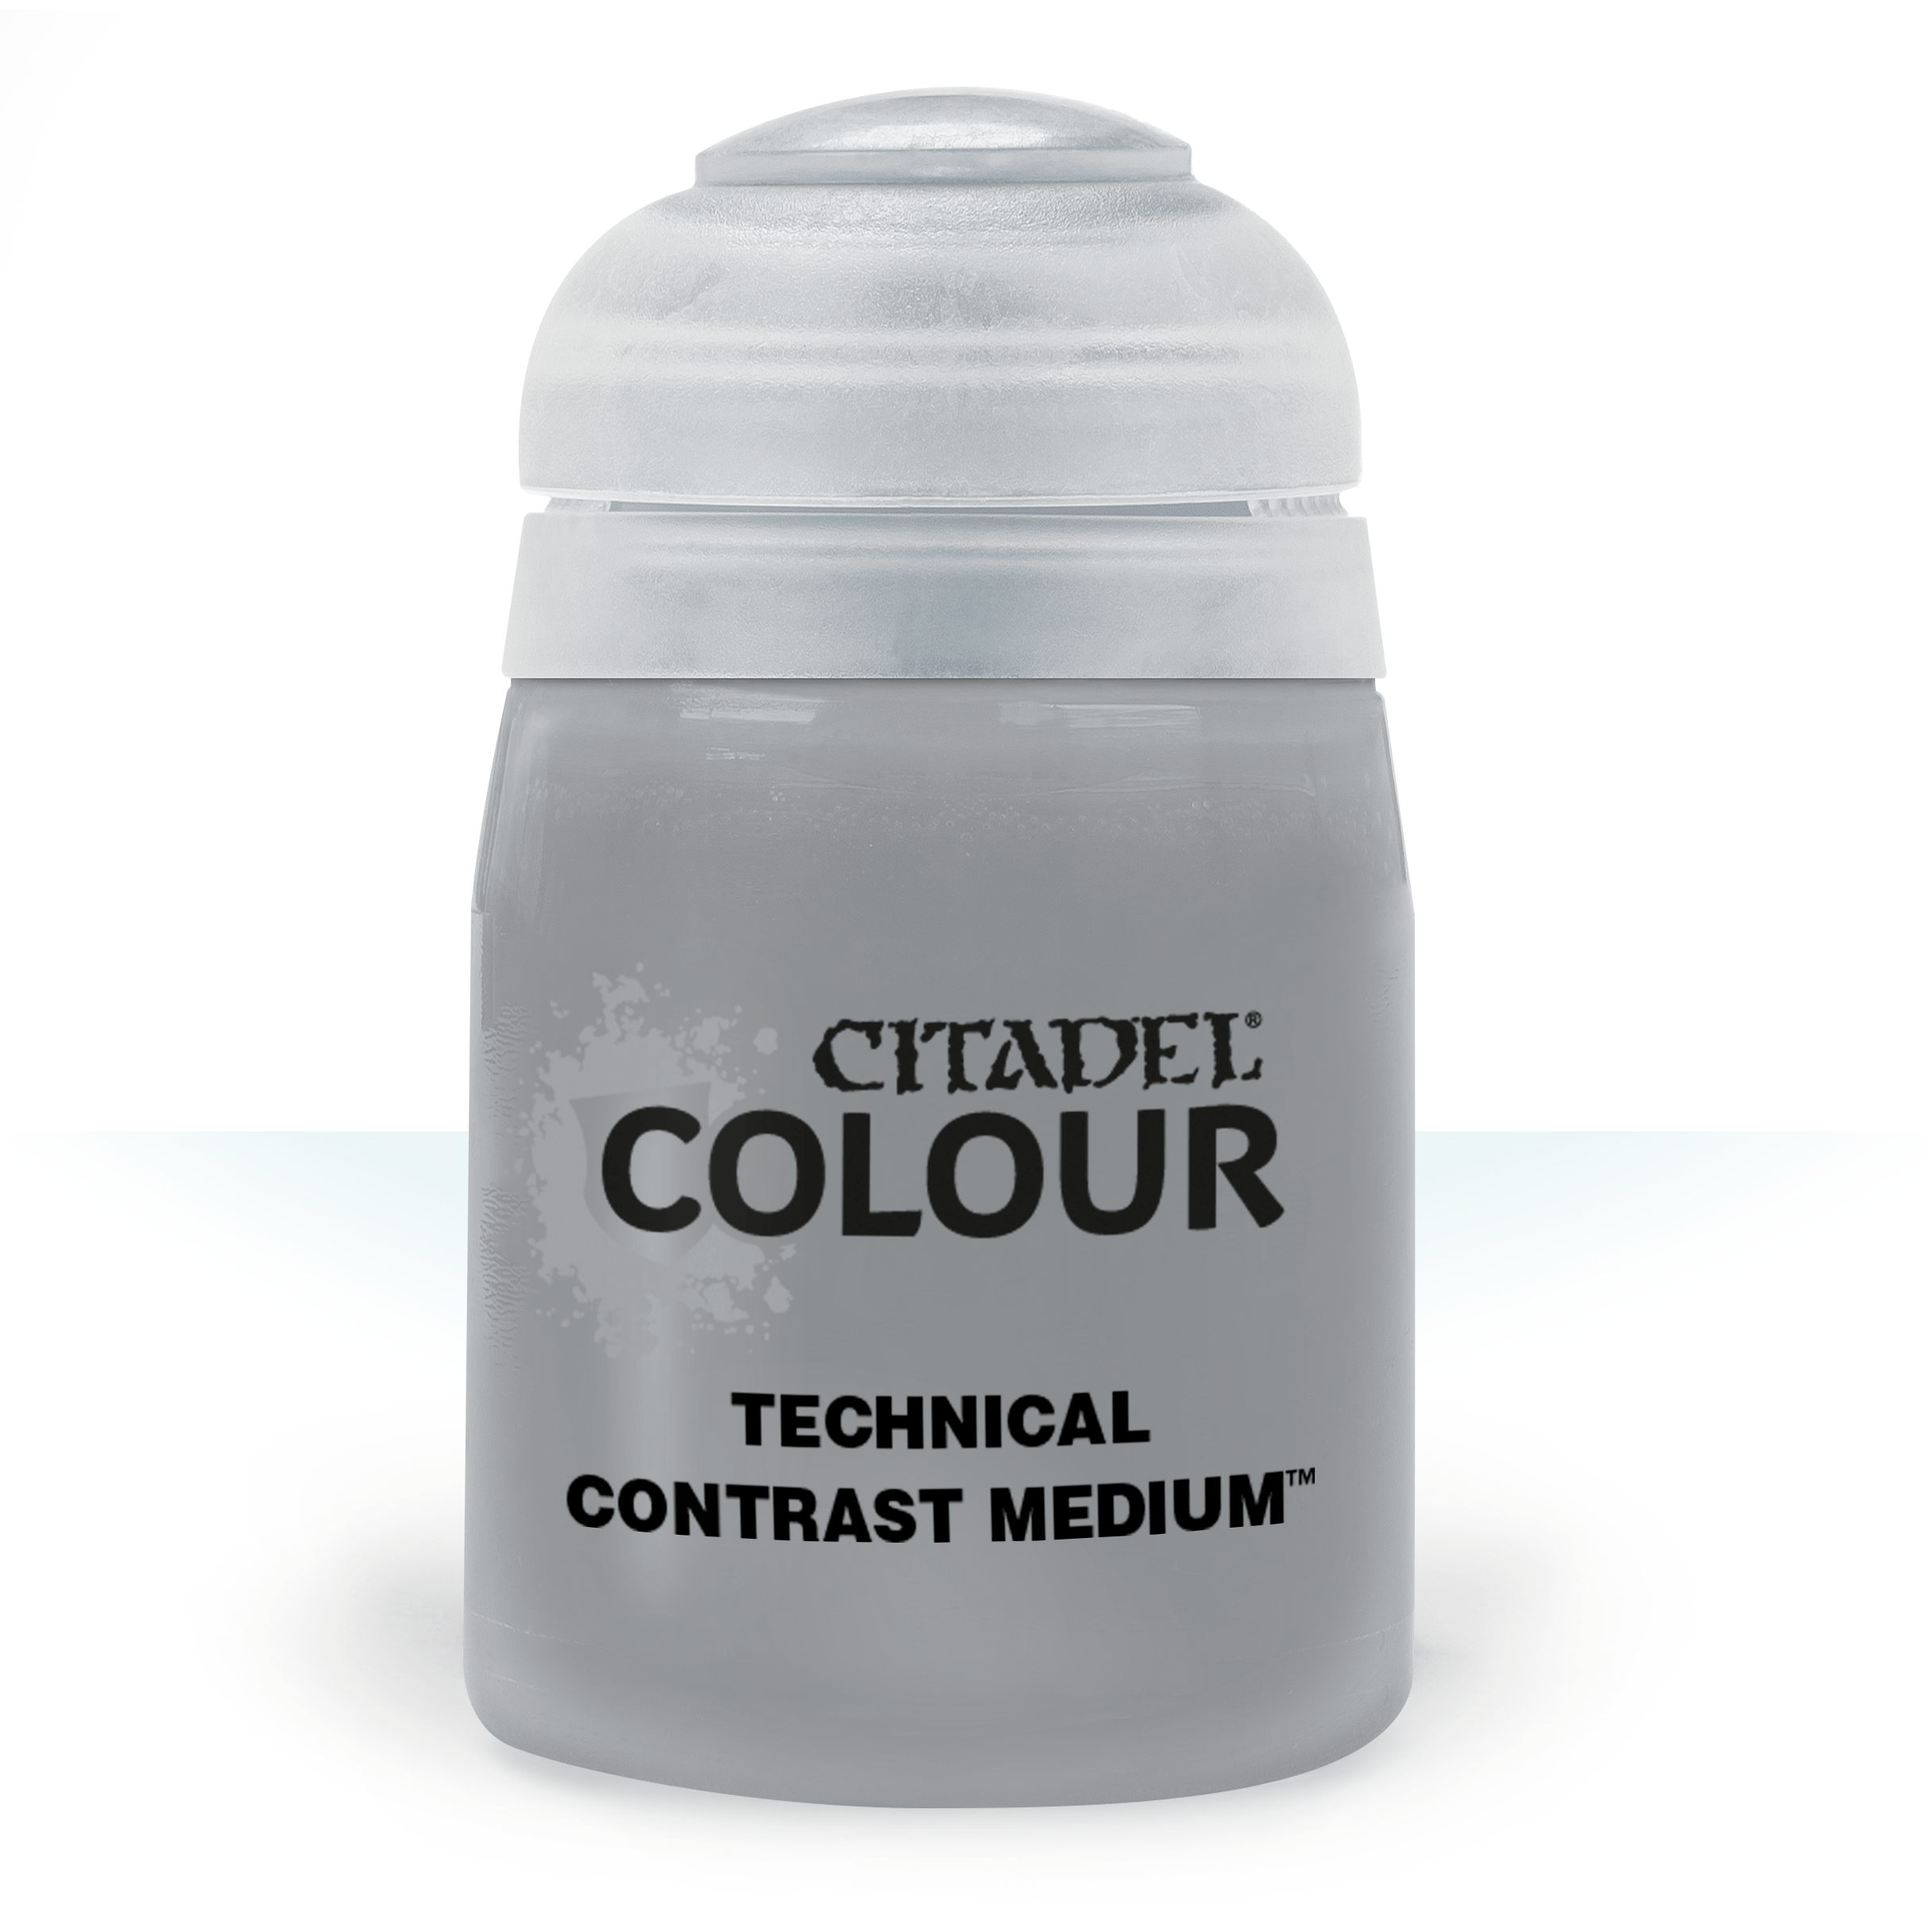 Technical Contrast Medium - Citadel Colour